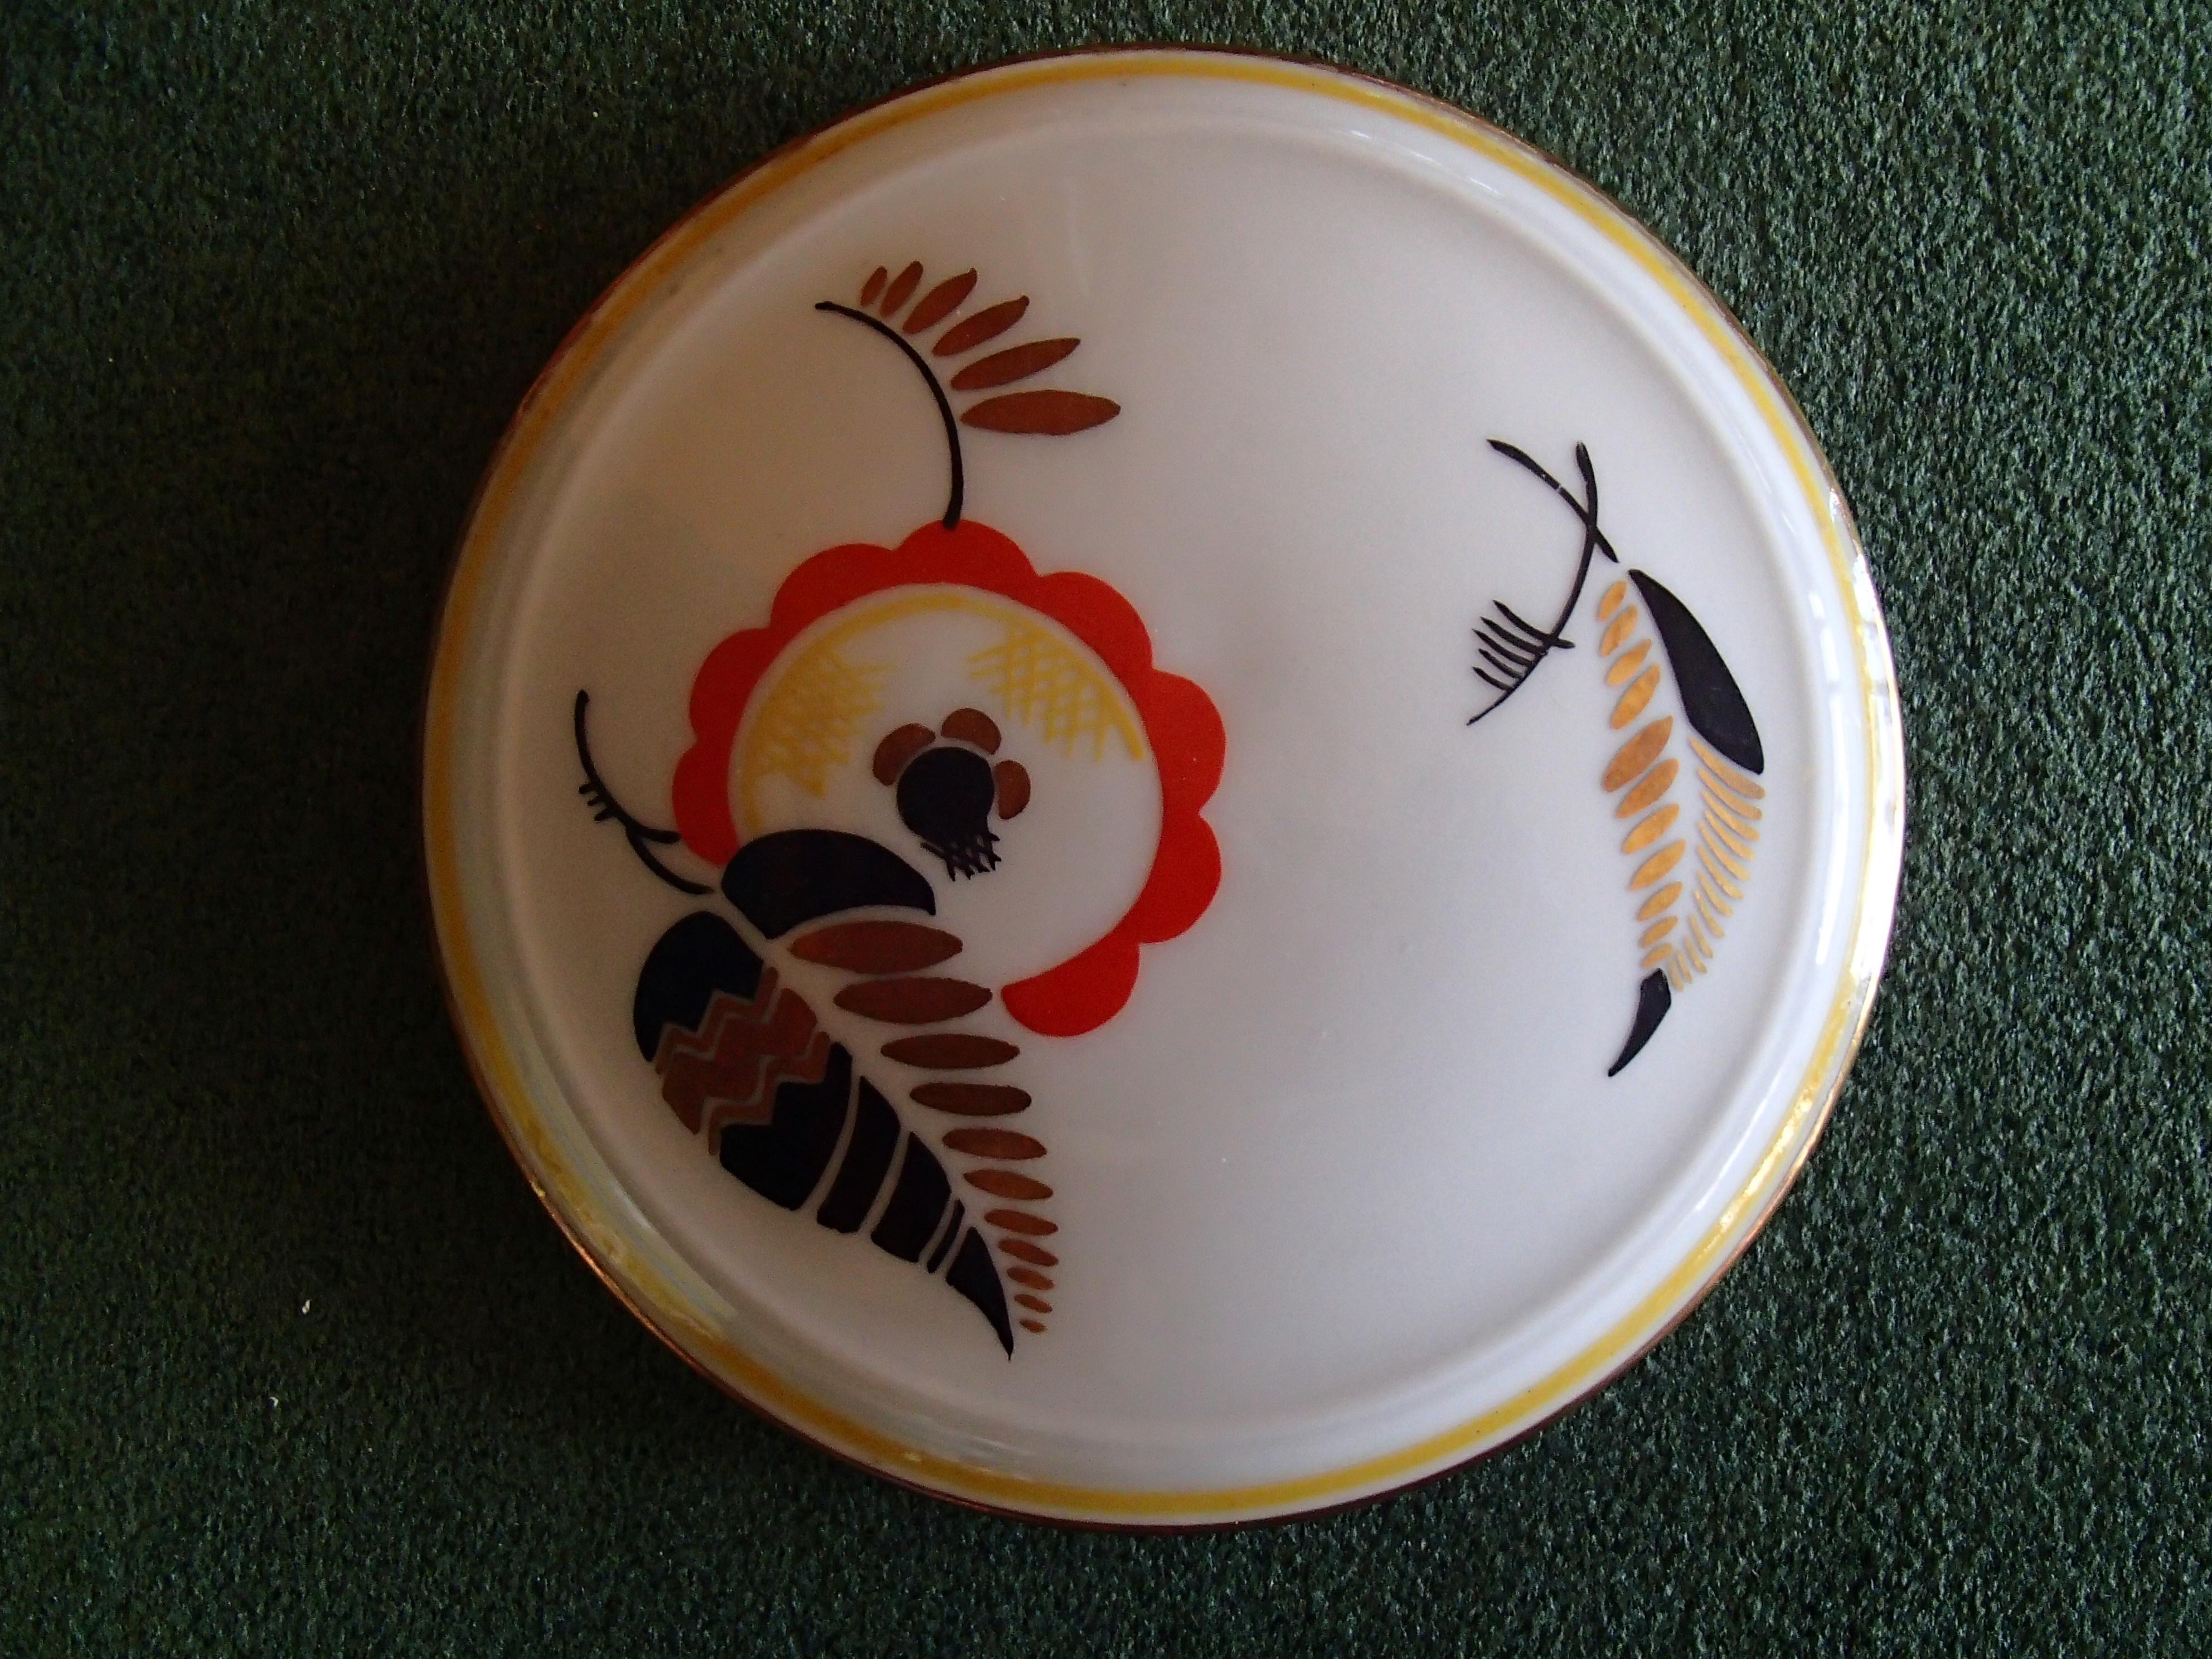 2 Langenthaler Keramikdosen mit geometrischem Muster im Art Deco-Stil
Größe: T 10 cm, H 4 cm // T 8,5 cm, H 6,5 cm.